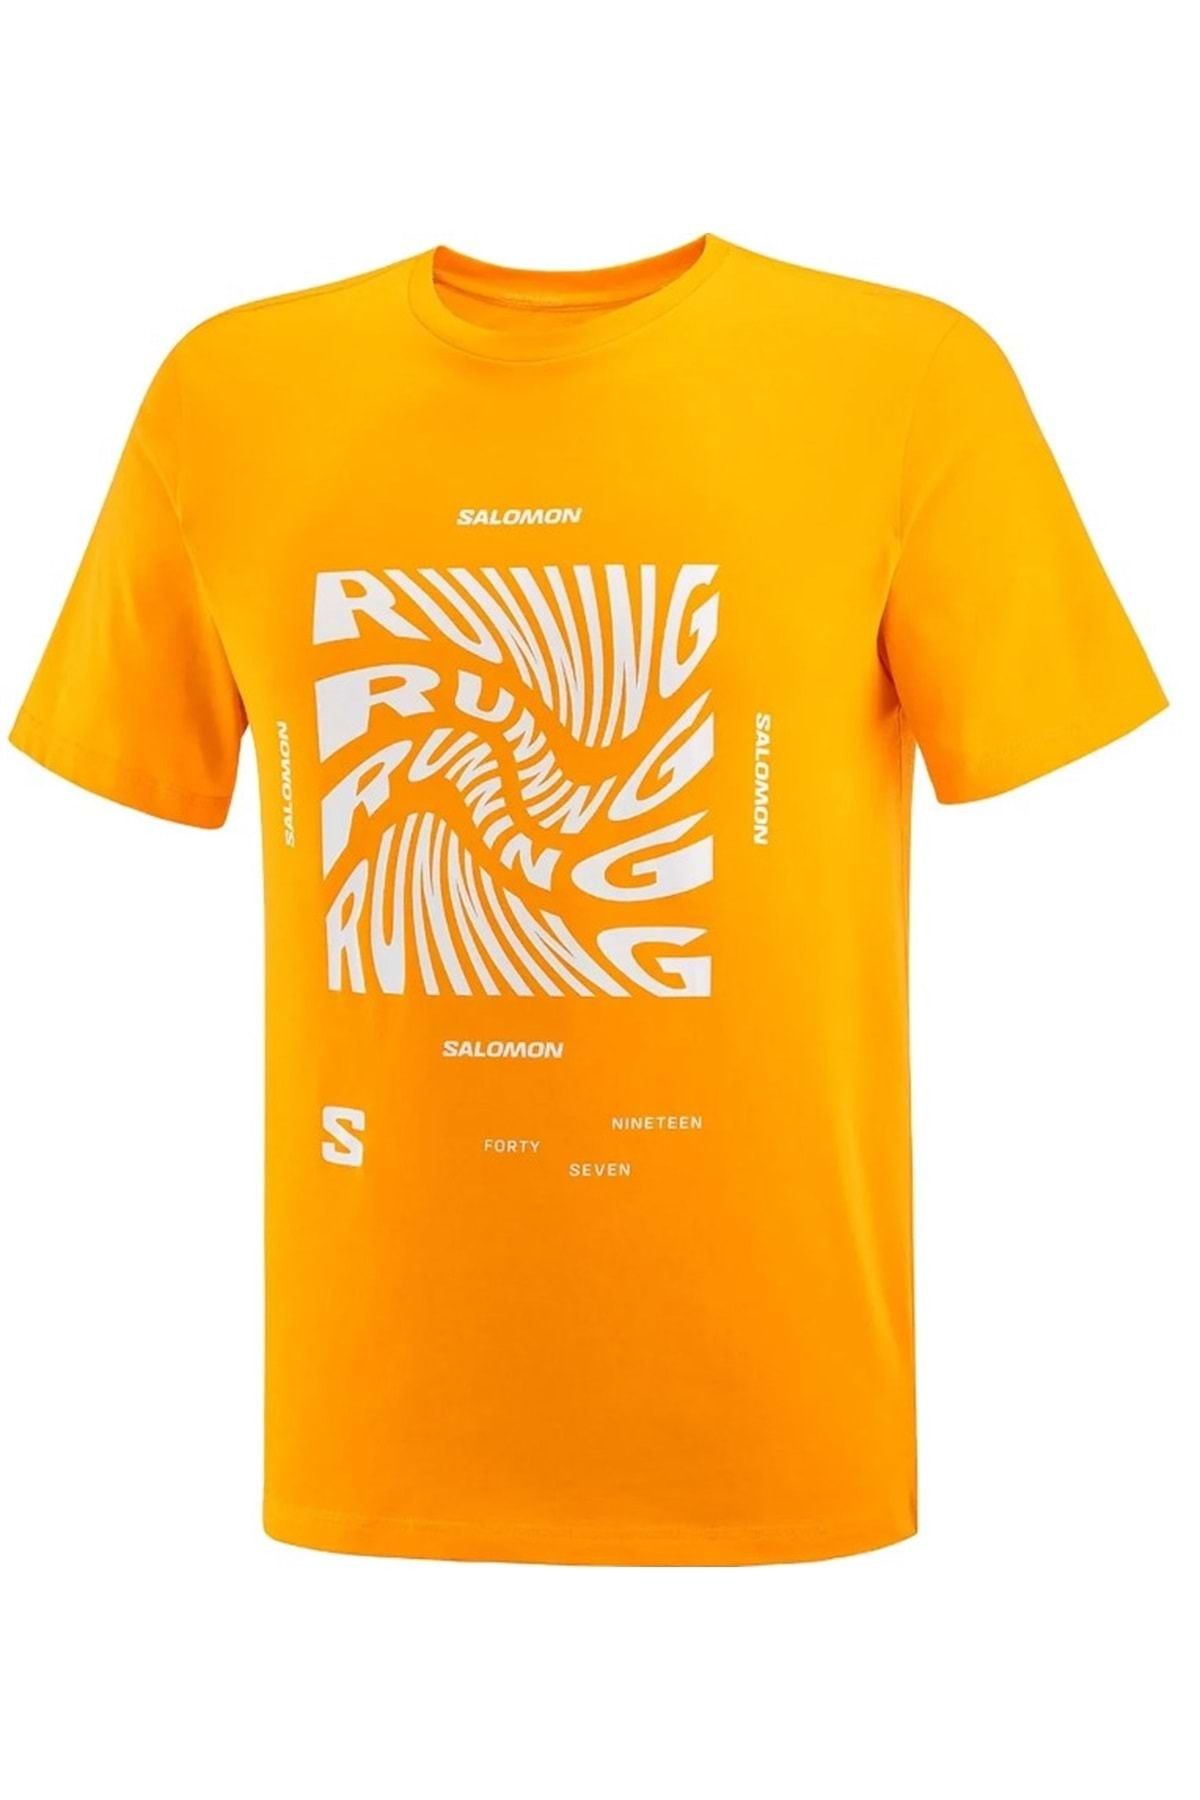 Salomon Lc2218800 Running Graphic Ss Tee Tişört Erkek T-shirt Turuncu